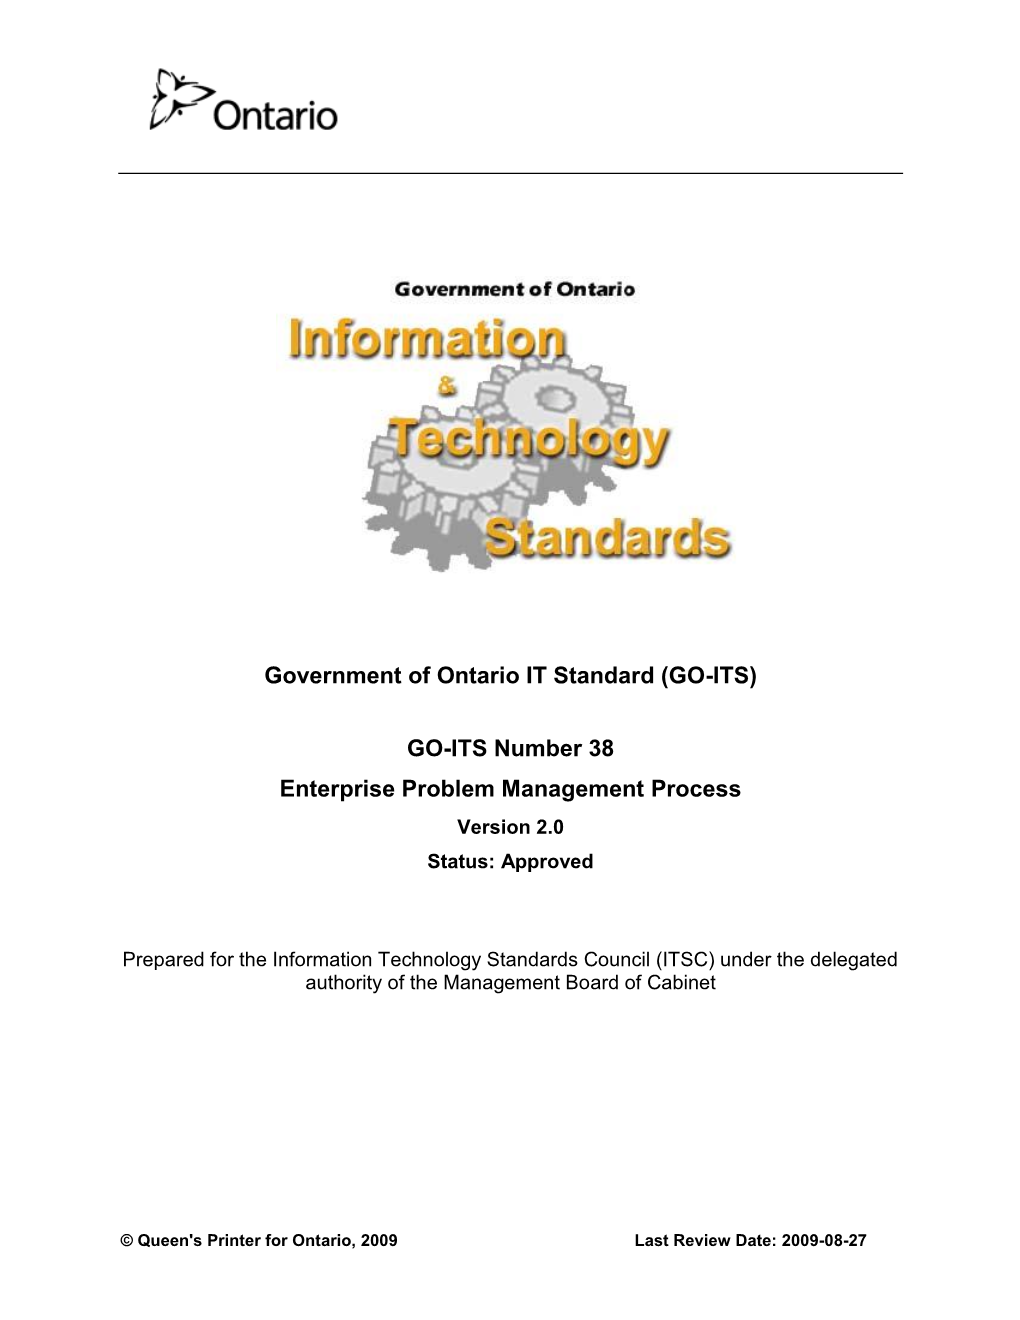 Enterprise Problem Management Process Version 2.0 Status: Approved